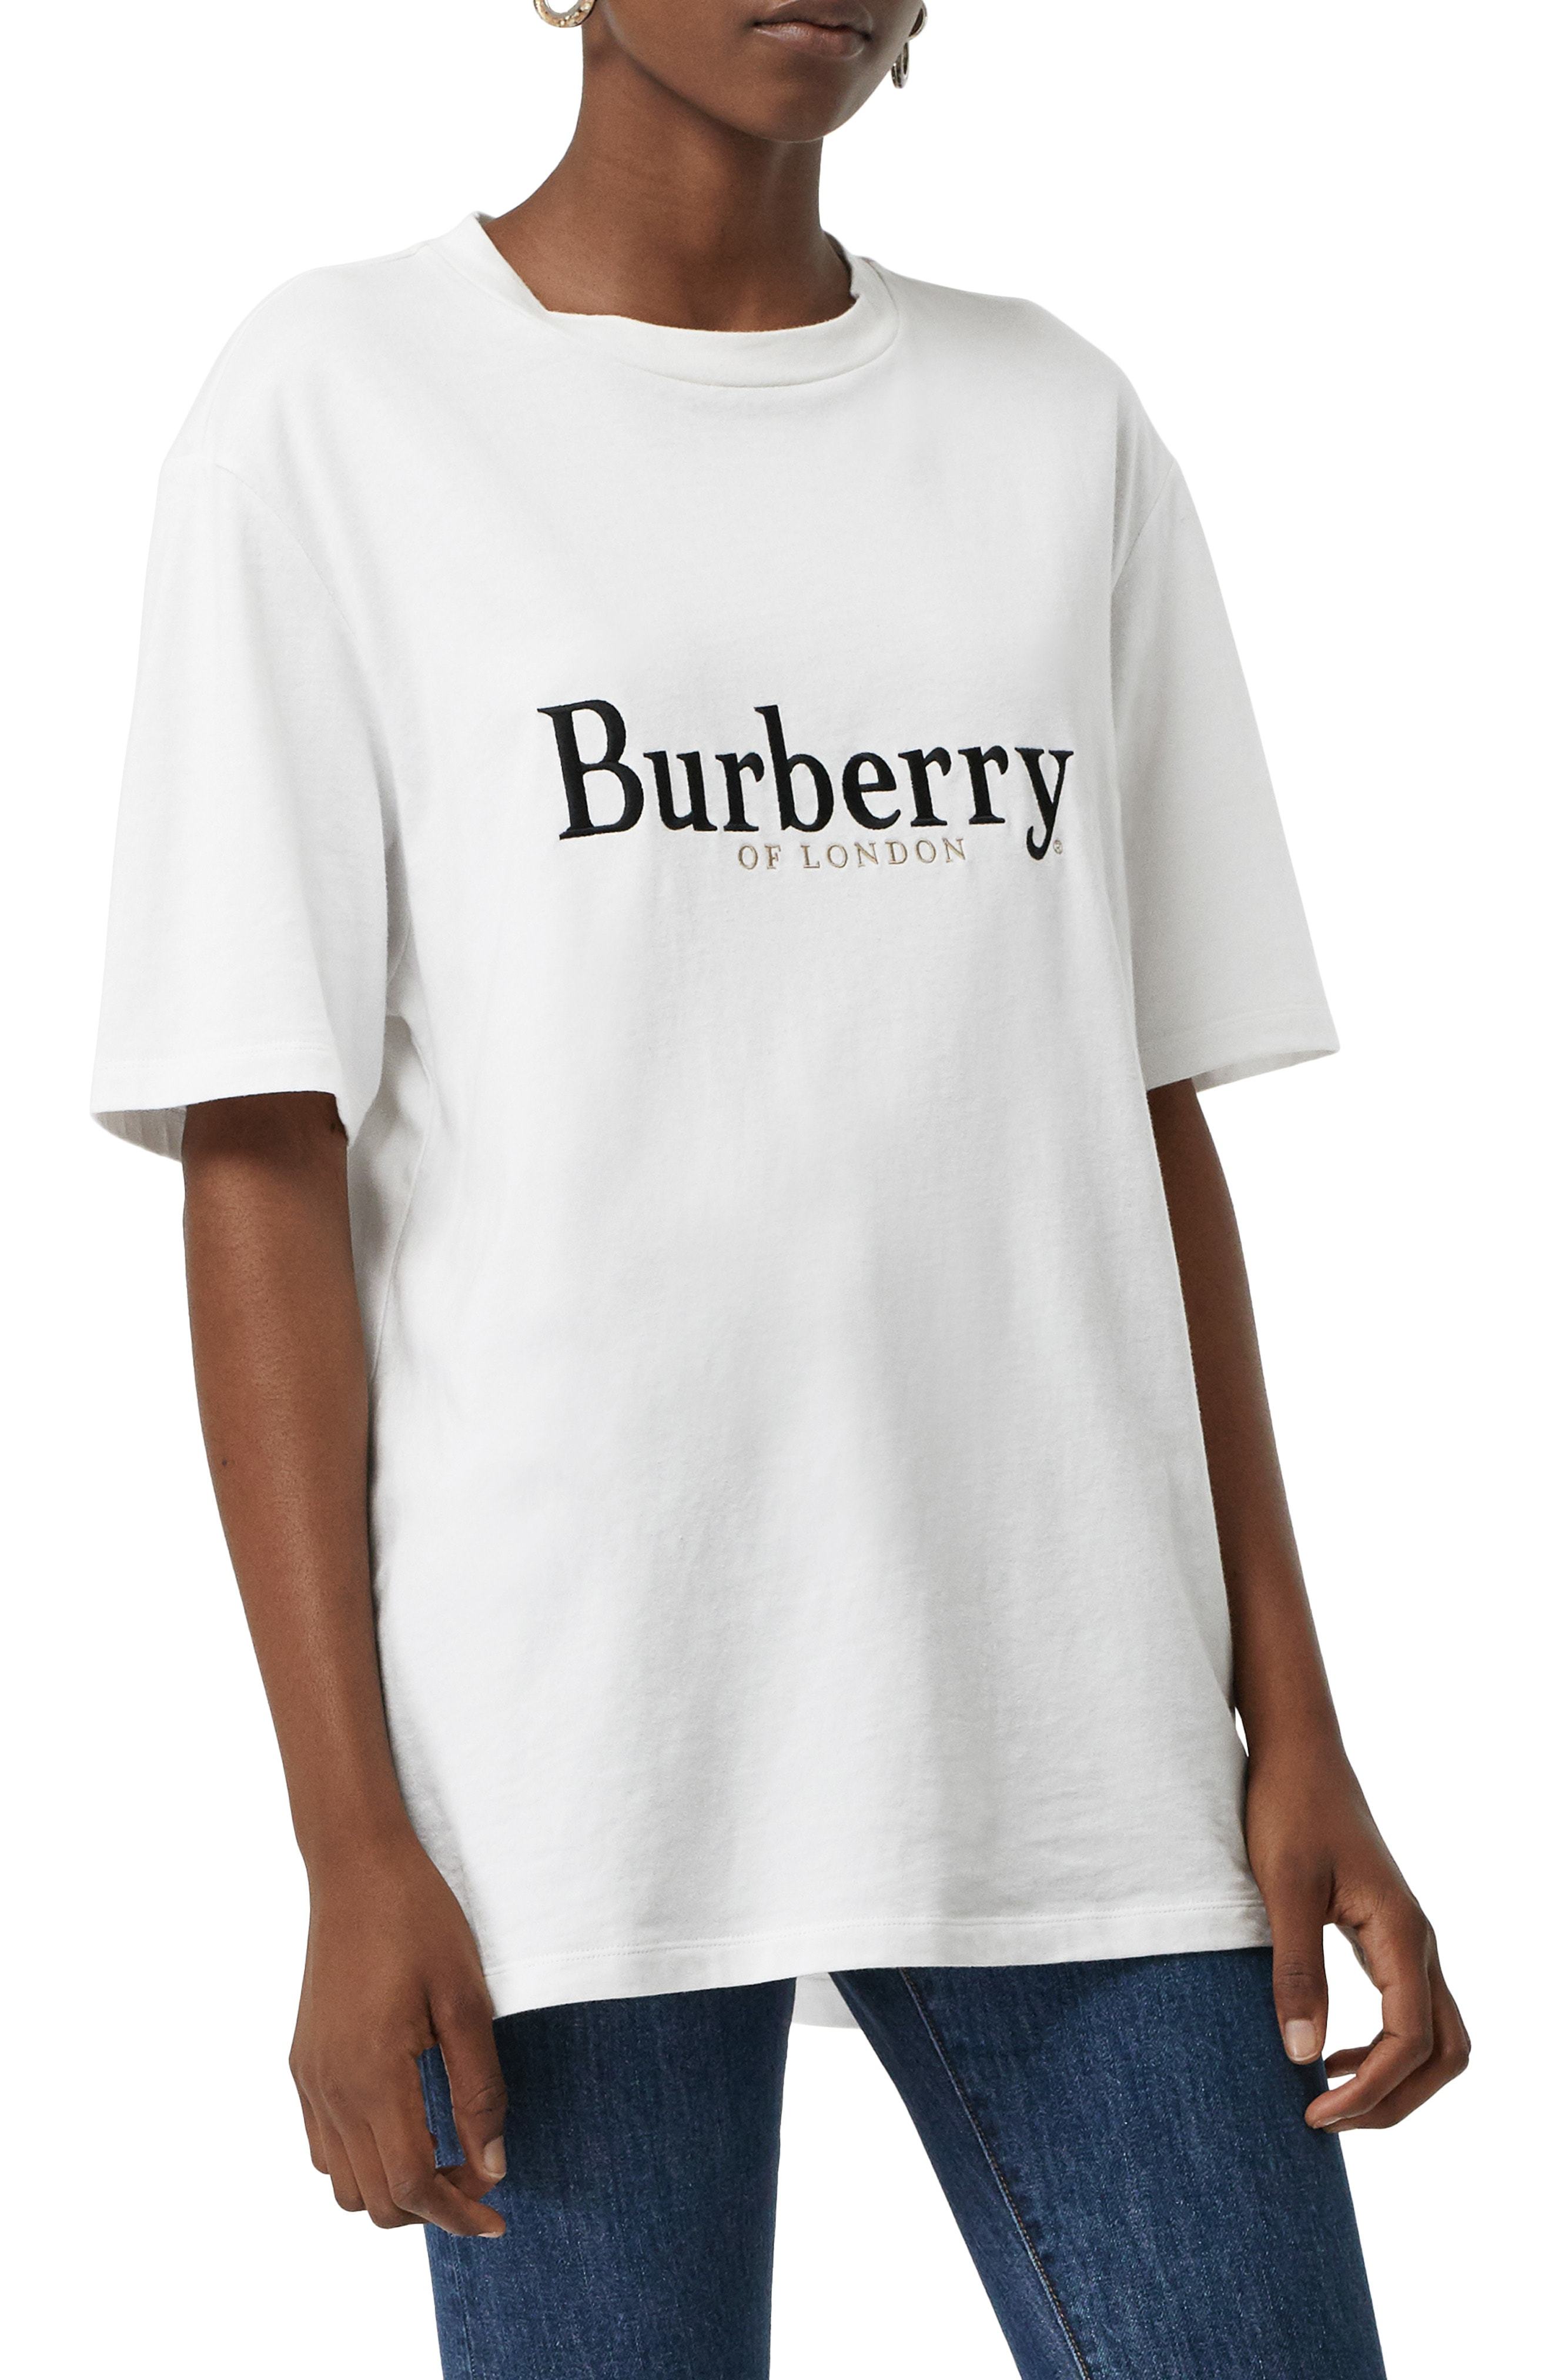 Burberry Lopori Archive Logo Tee, $240 